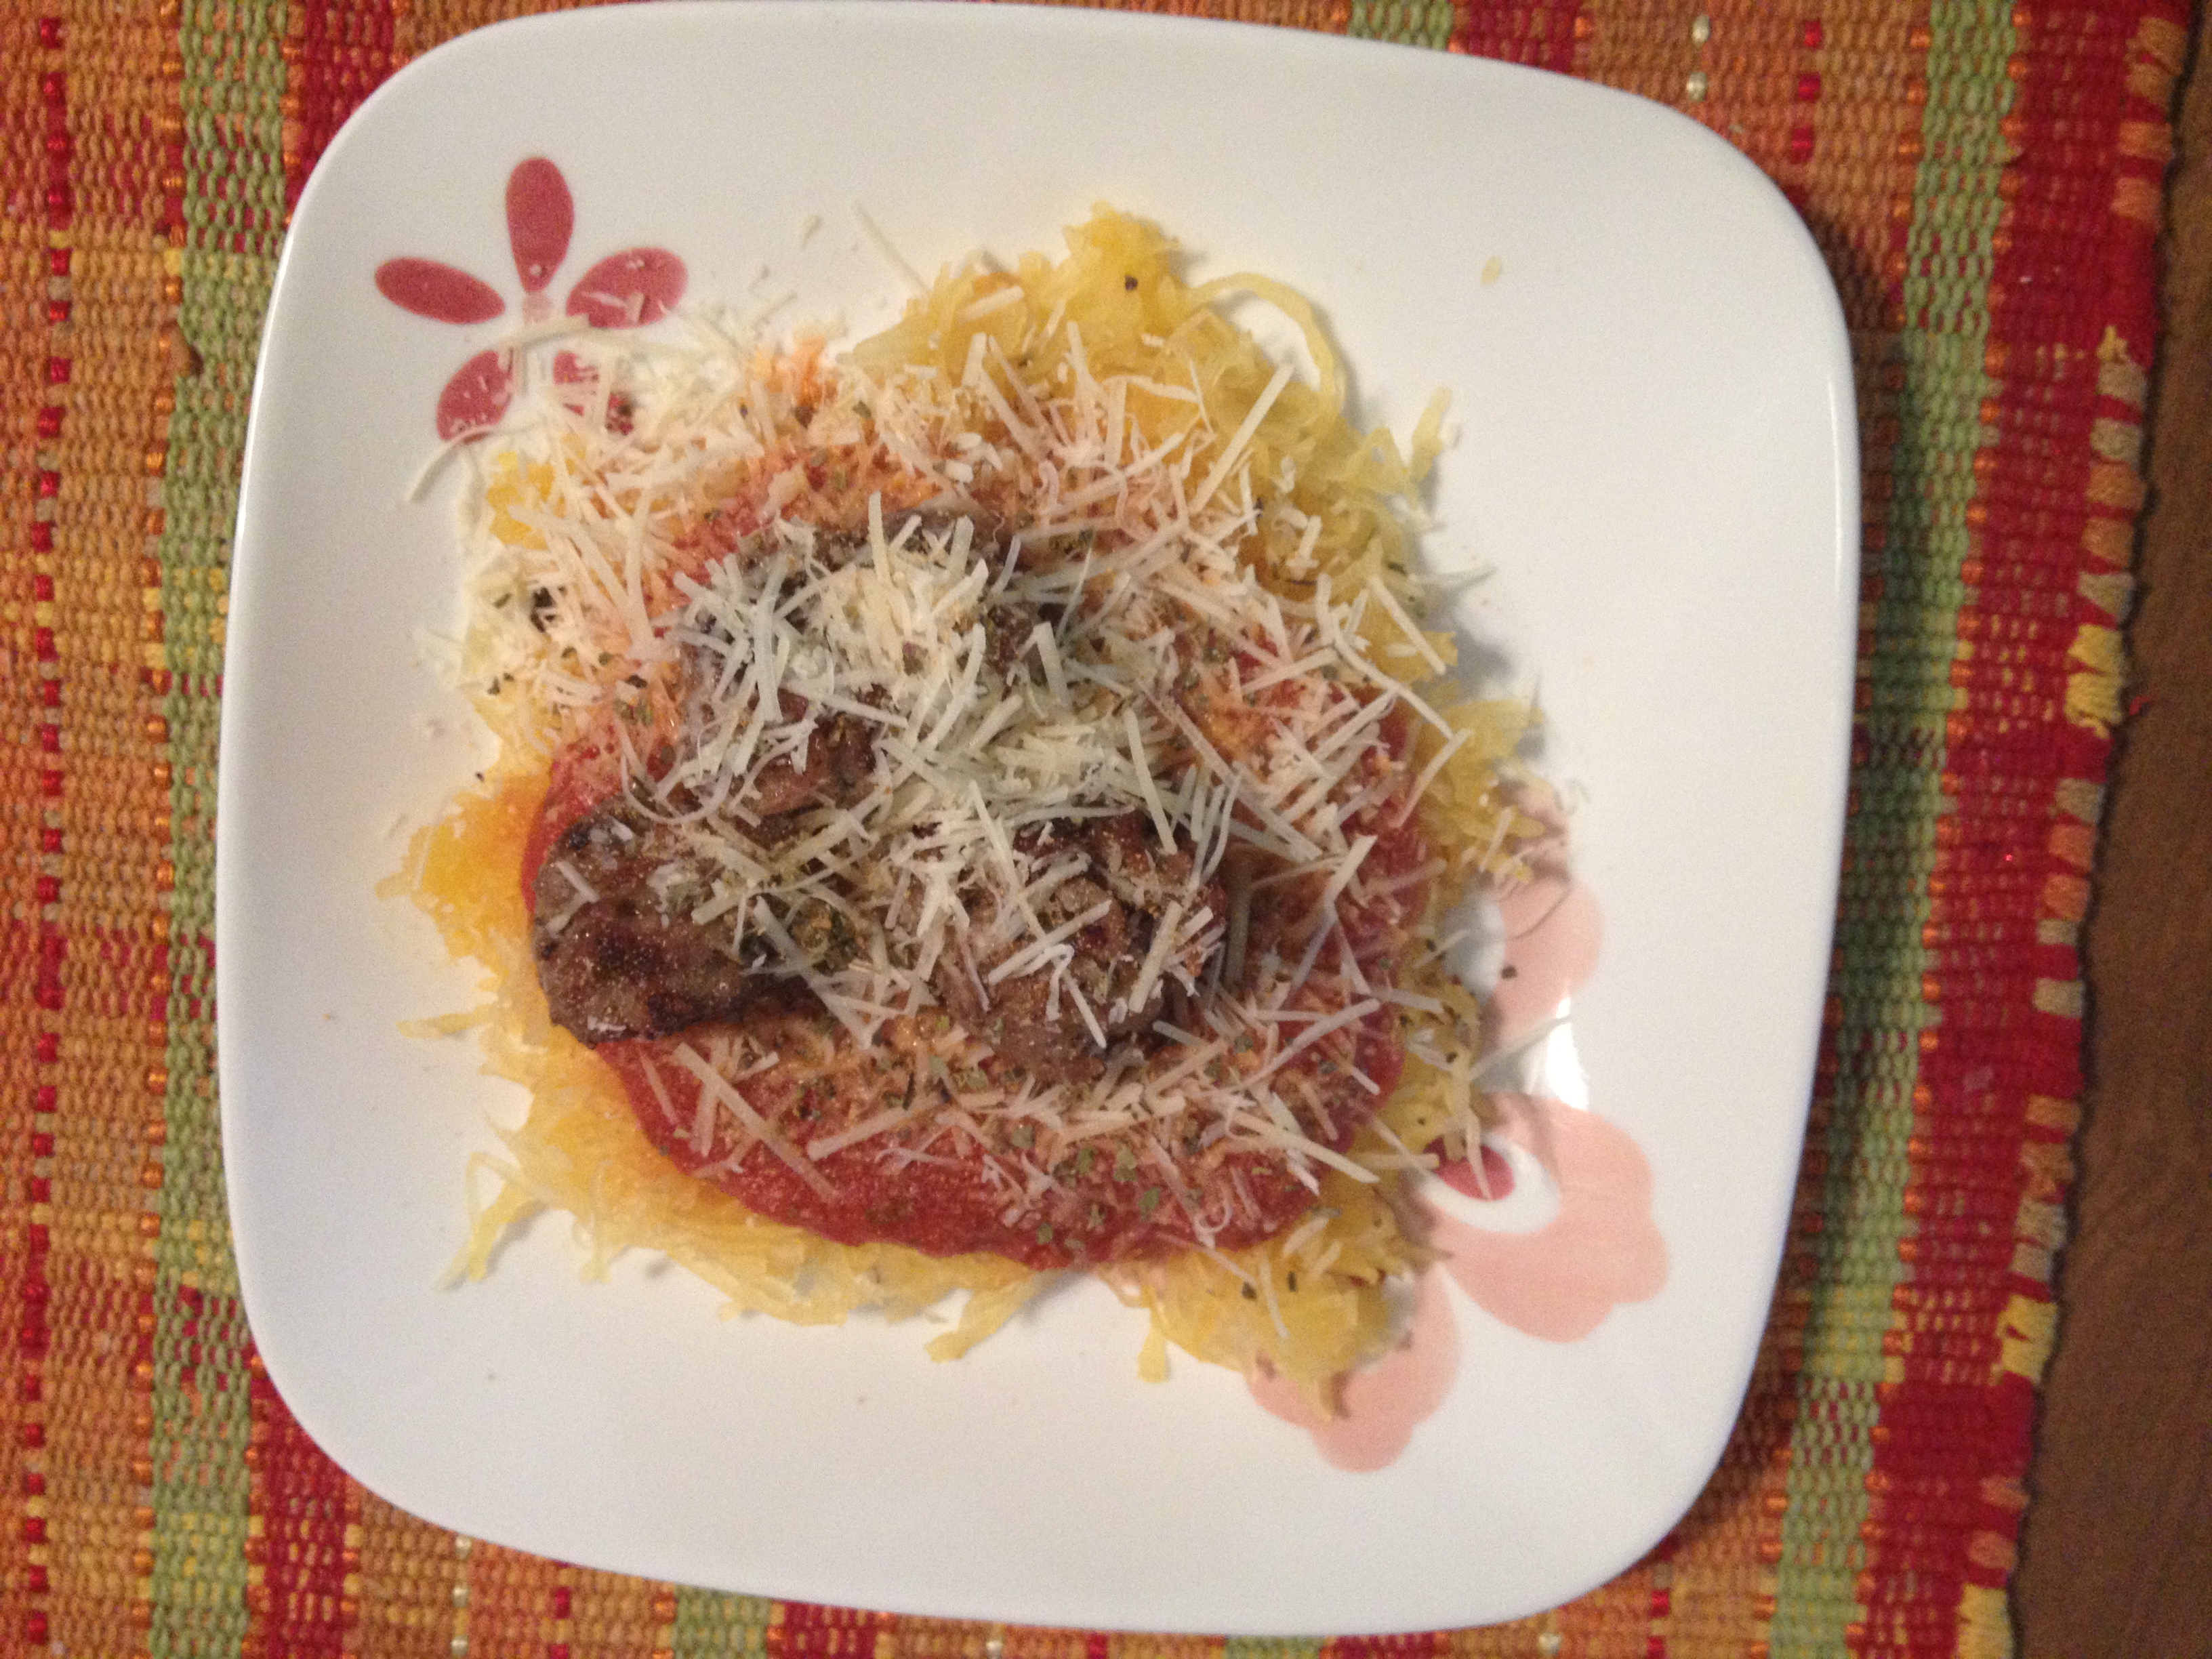 How to Make Spaghetti From Spaghetti Squash